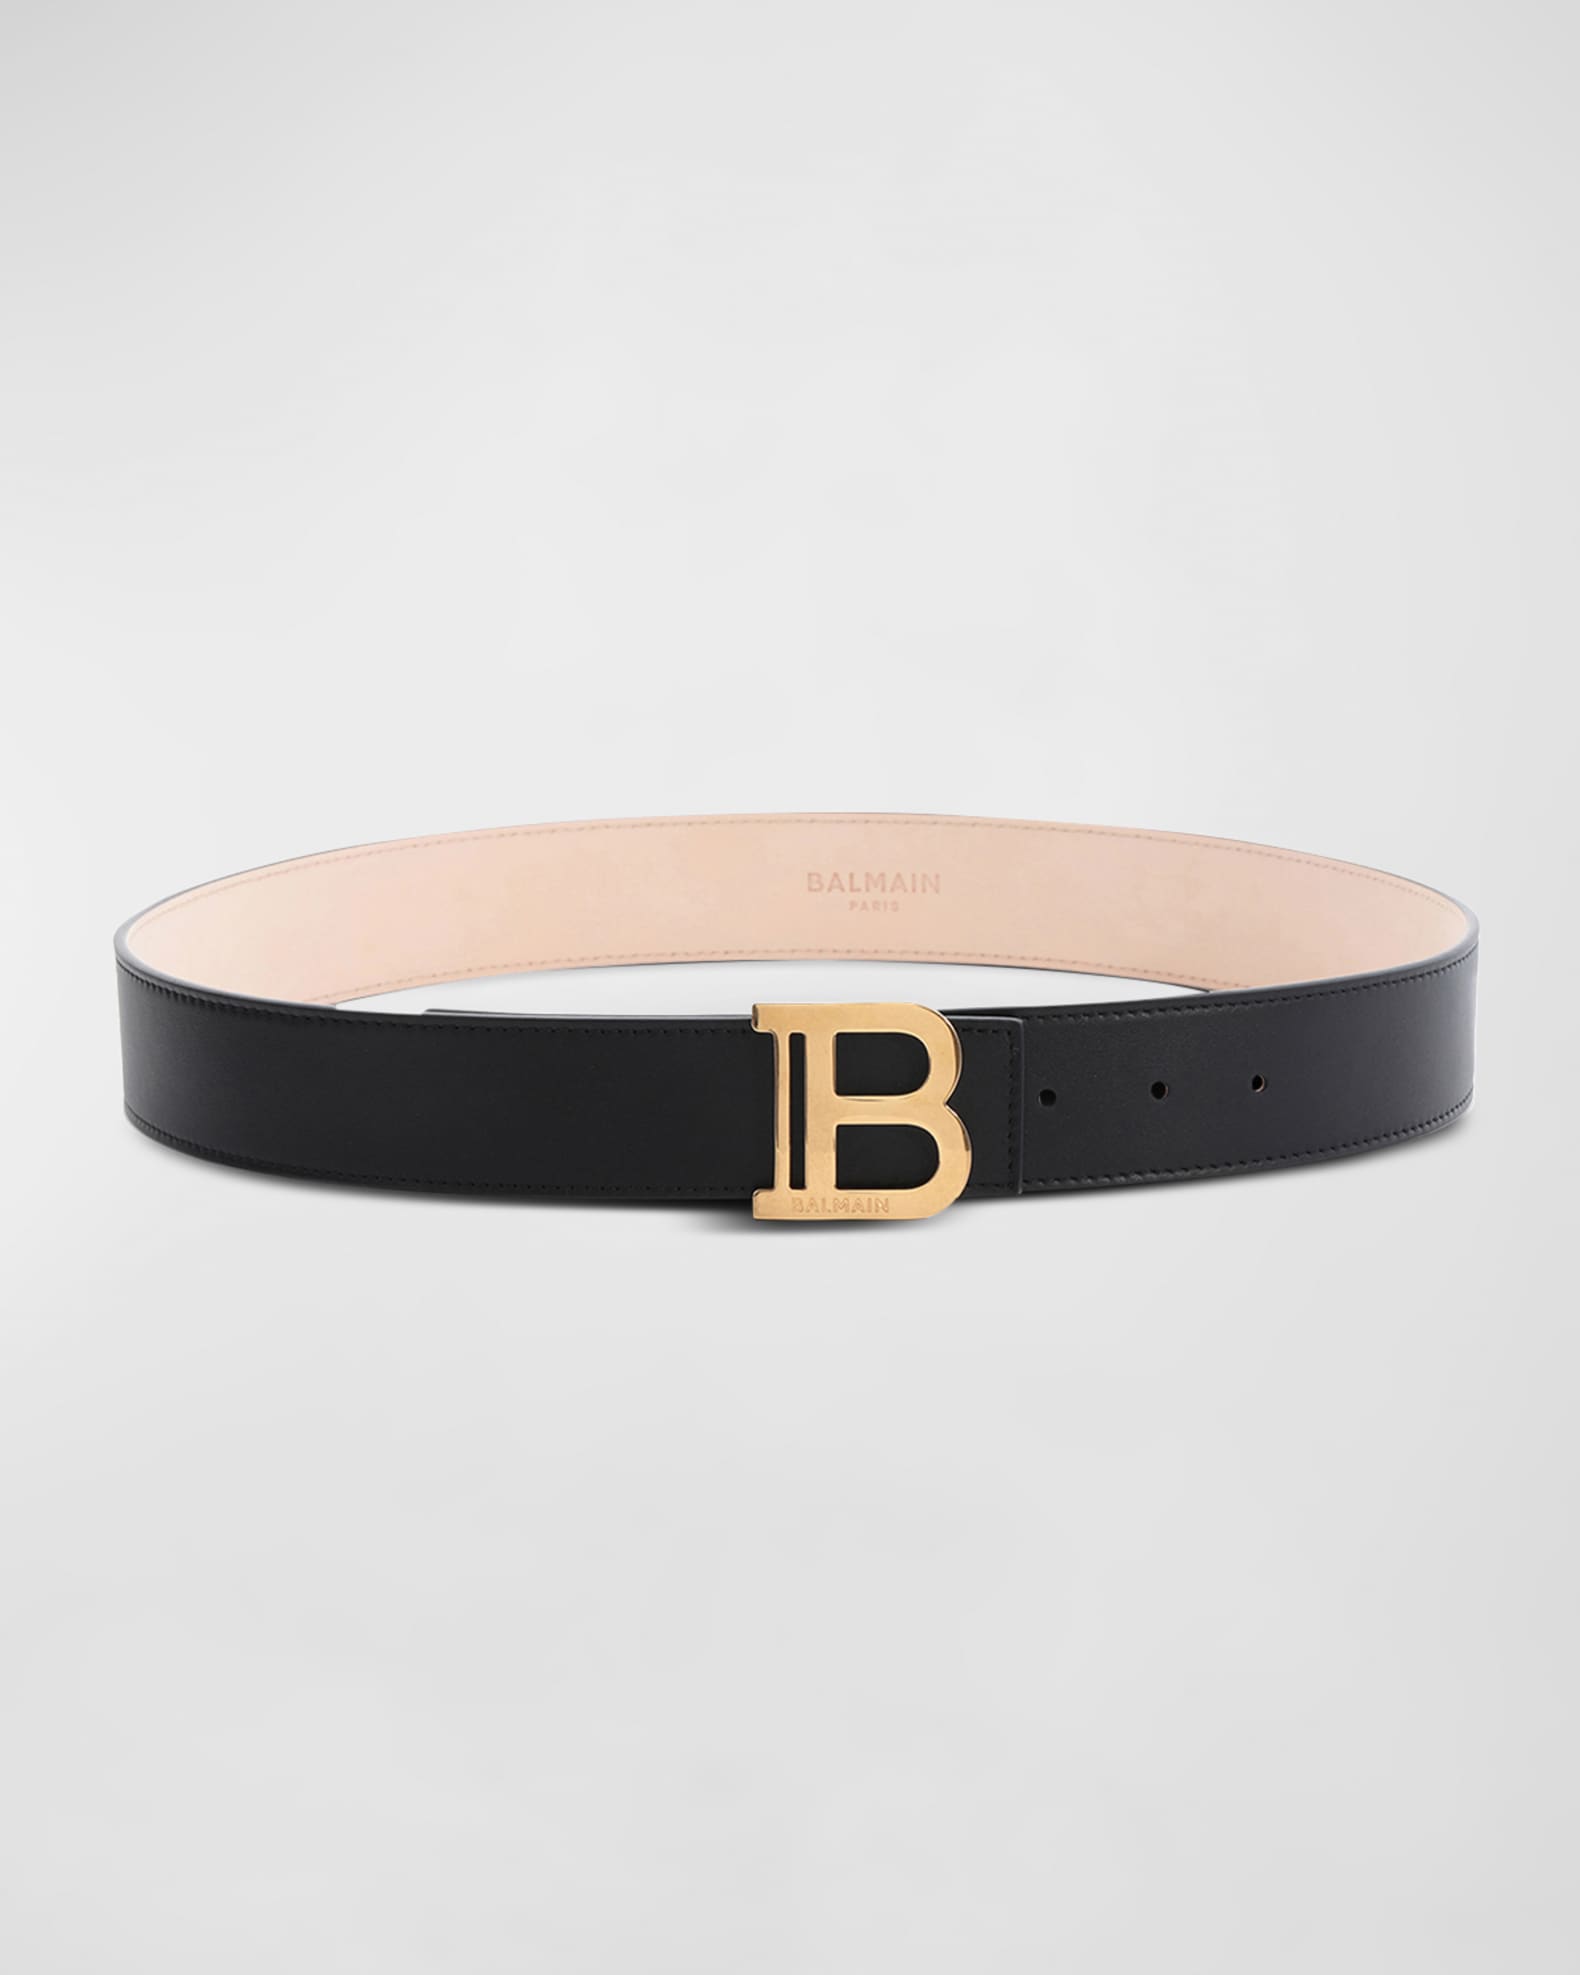 Balmain B-Belt reversible belt - Black